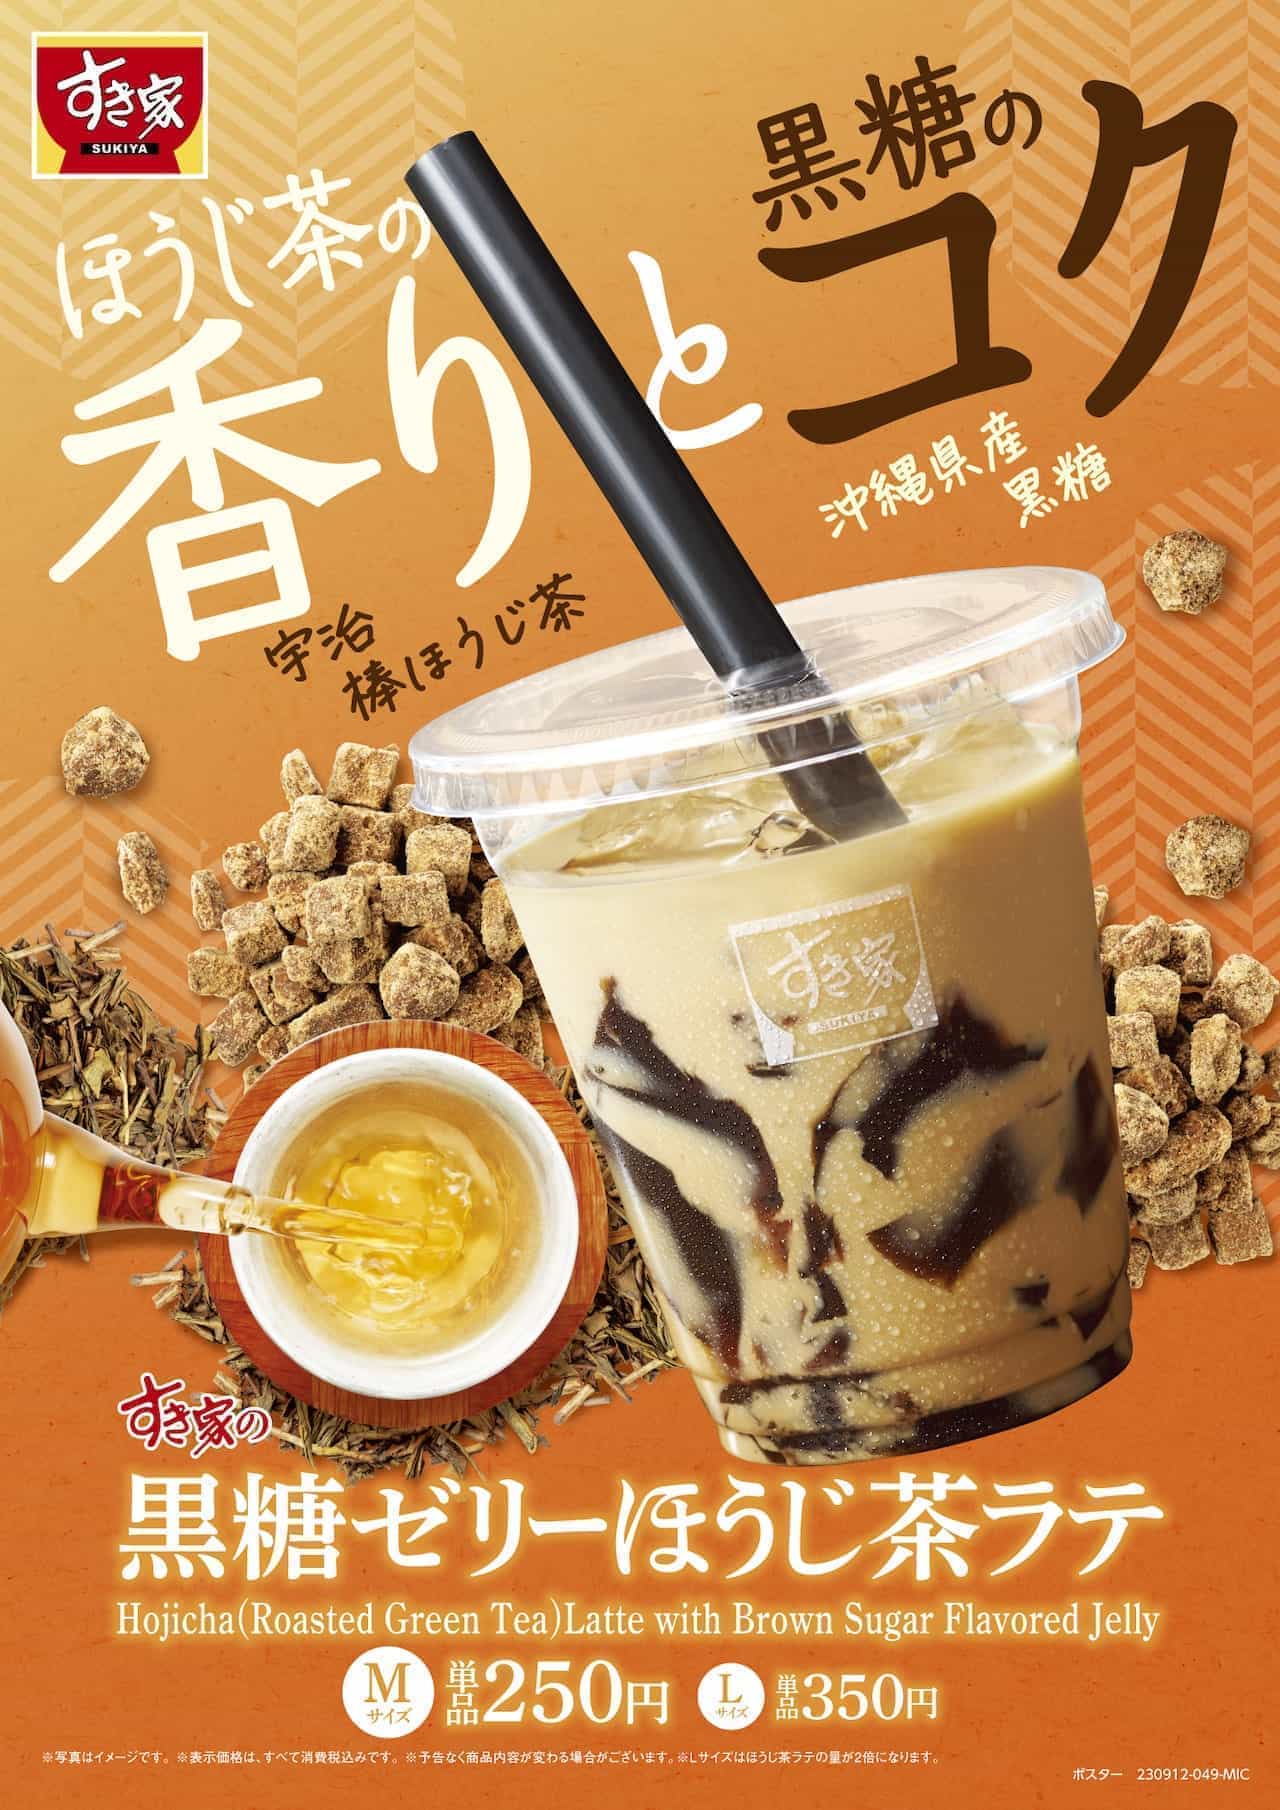 Sukiya brown sugar jelly hojicha latte